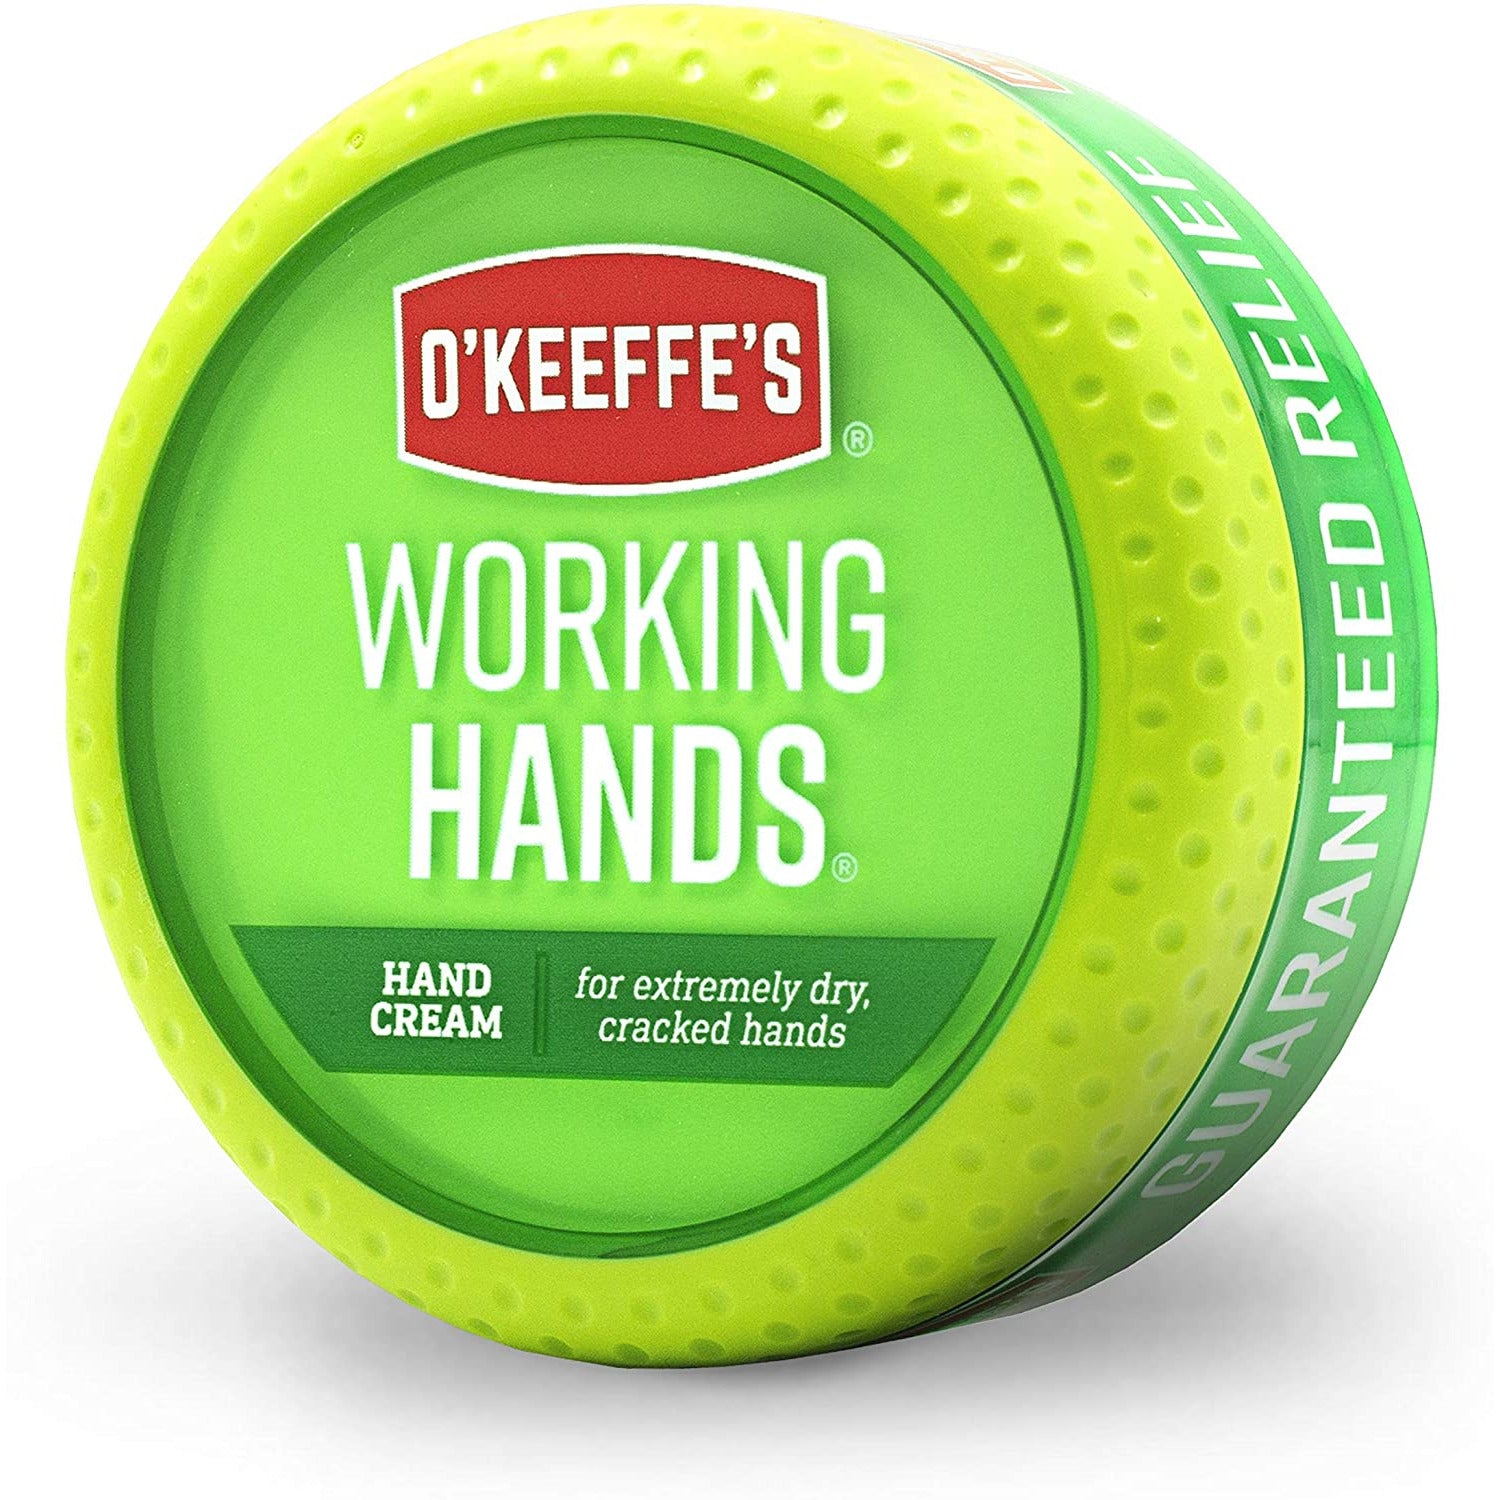 O'Keeffe's Working Hands 3.4 oz. Jar